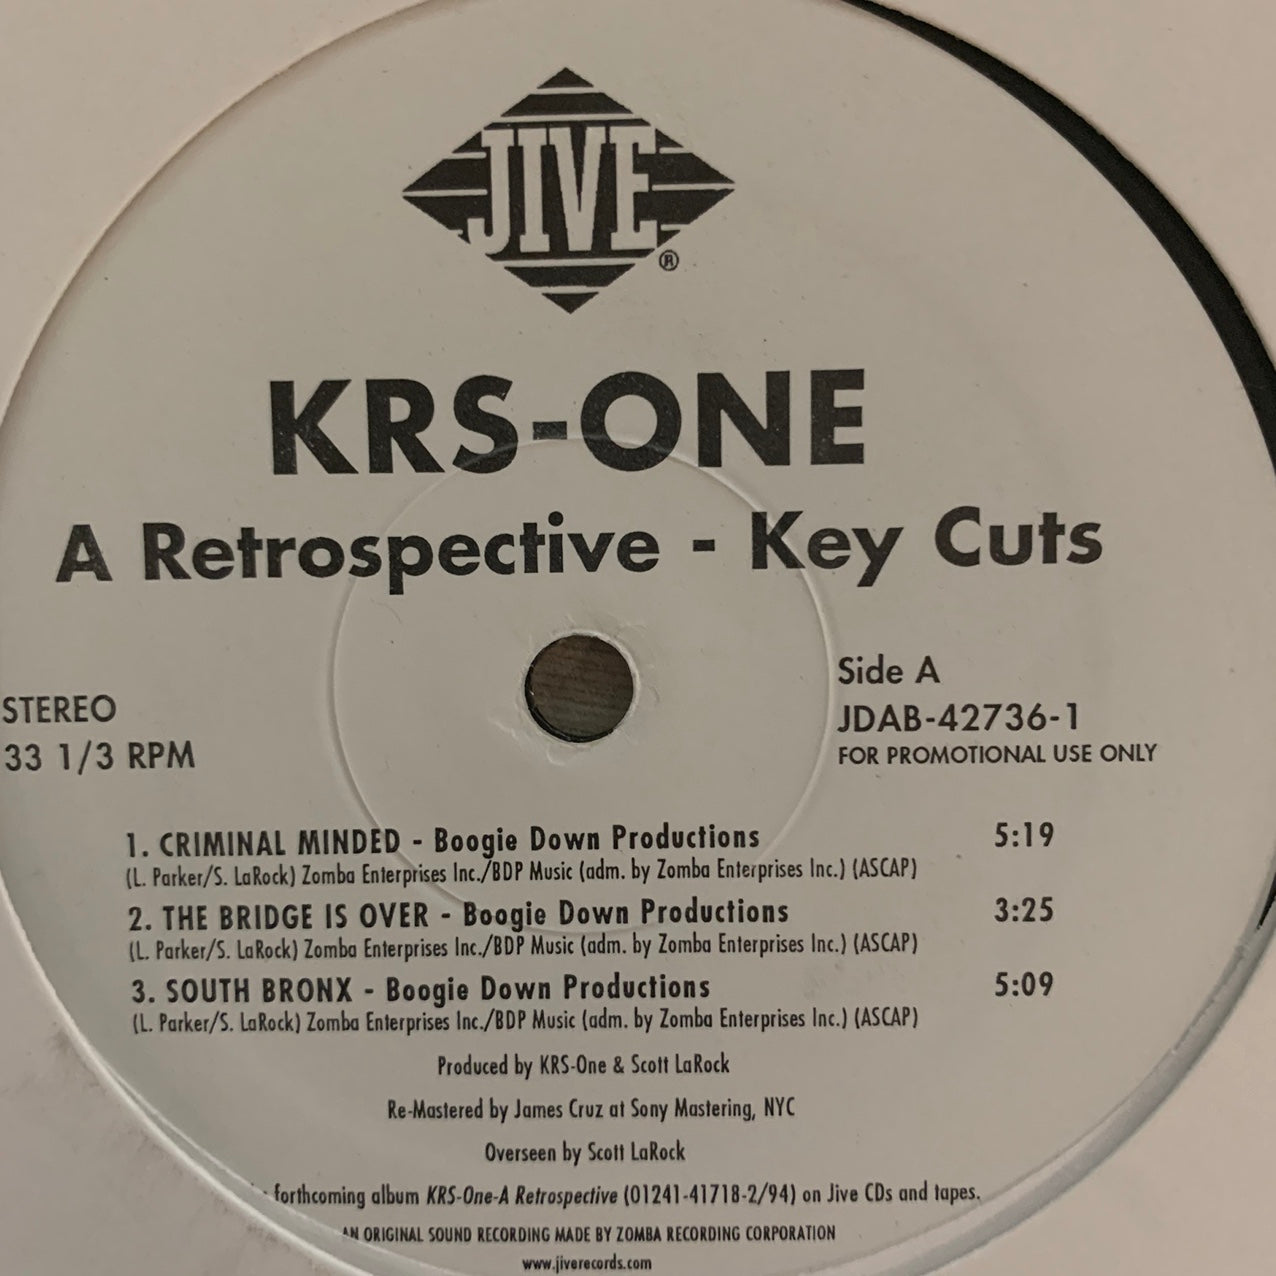 KRS-ONE ‘A Retrospective’ 6 Track 12inch Album Sampler Feat “My Philosophy” / “Jack Of Spades” / “Criminal Minded” / “South Bronx”